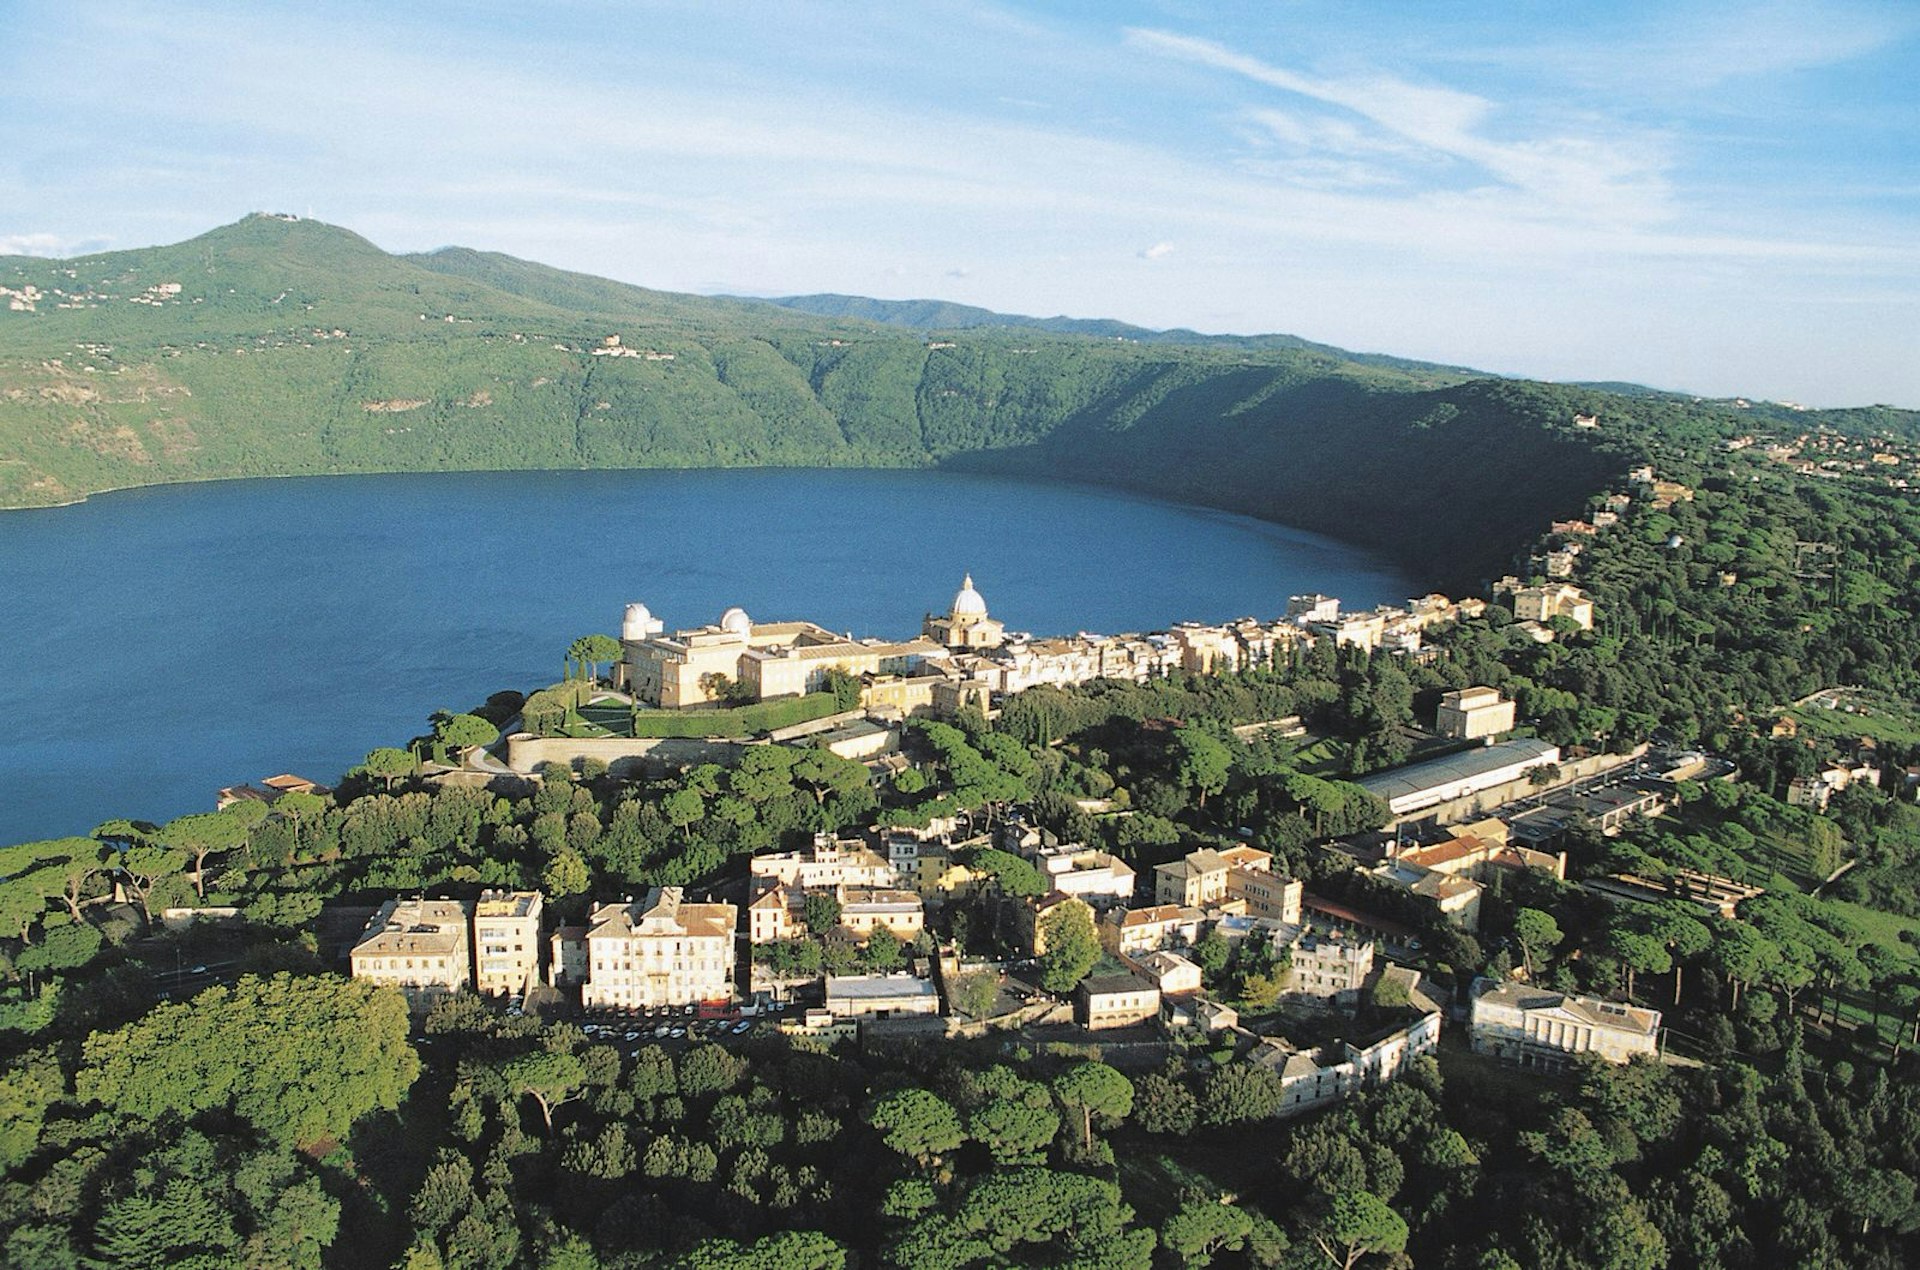 Castel Gandolfo sits on a dramatic ridge above Lake Albano